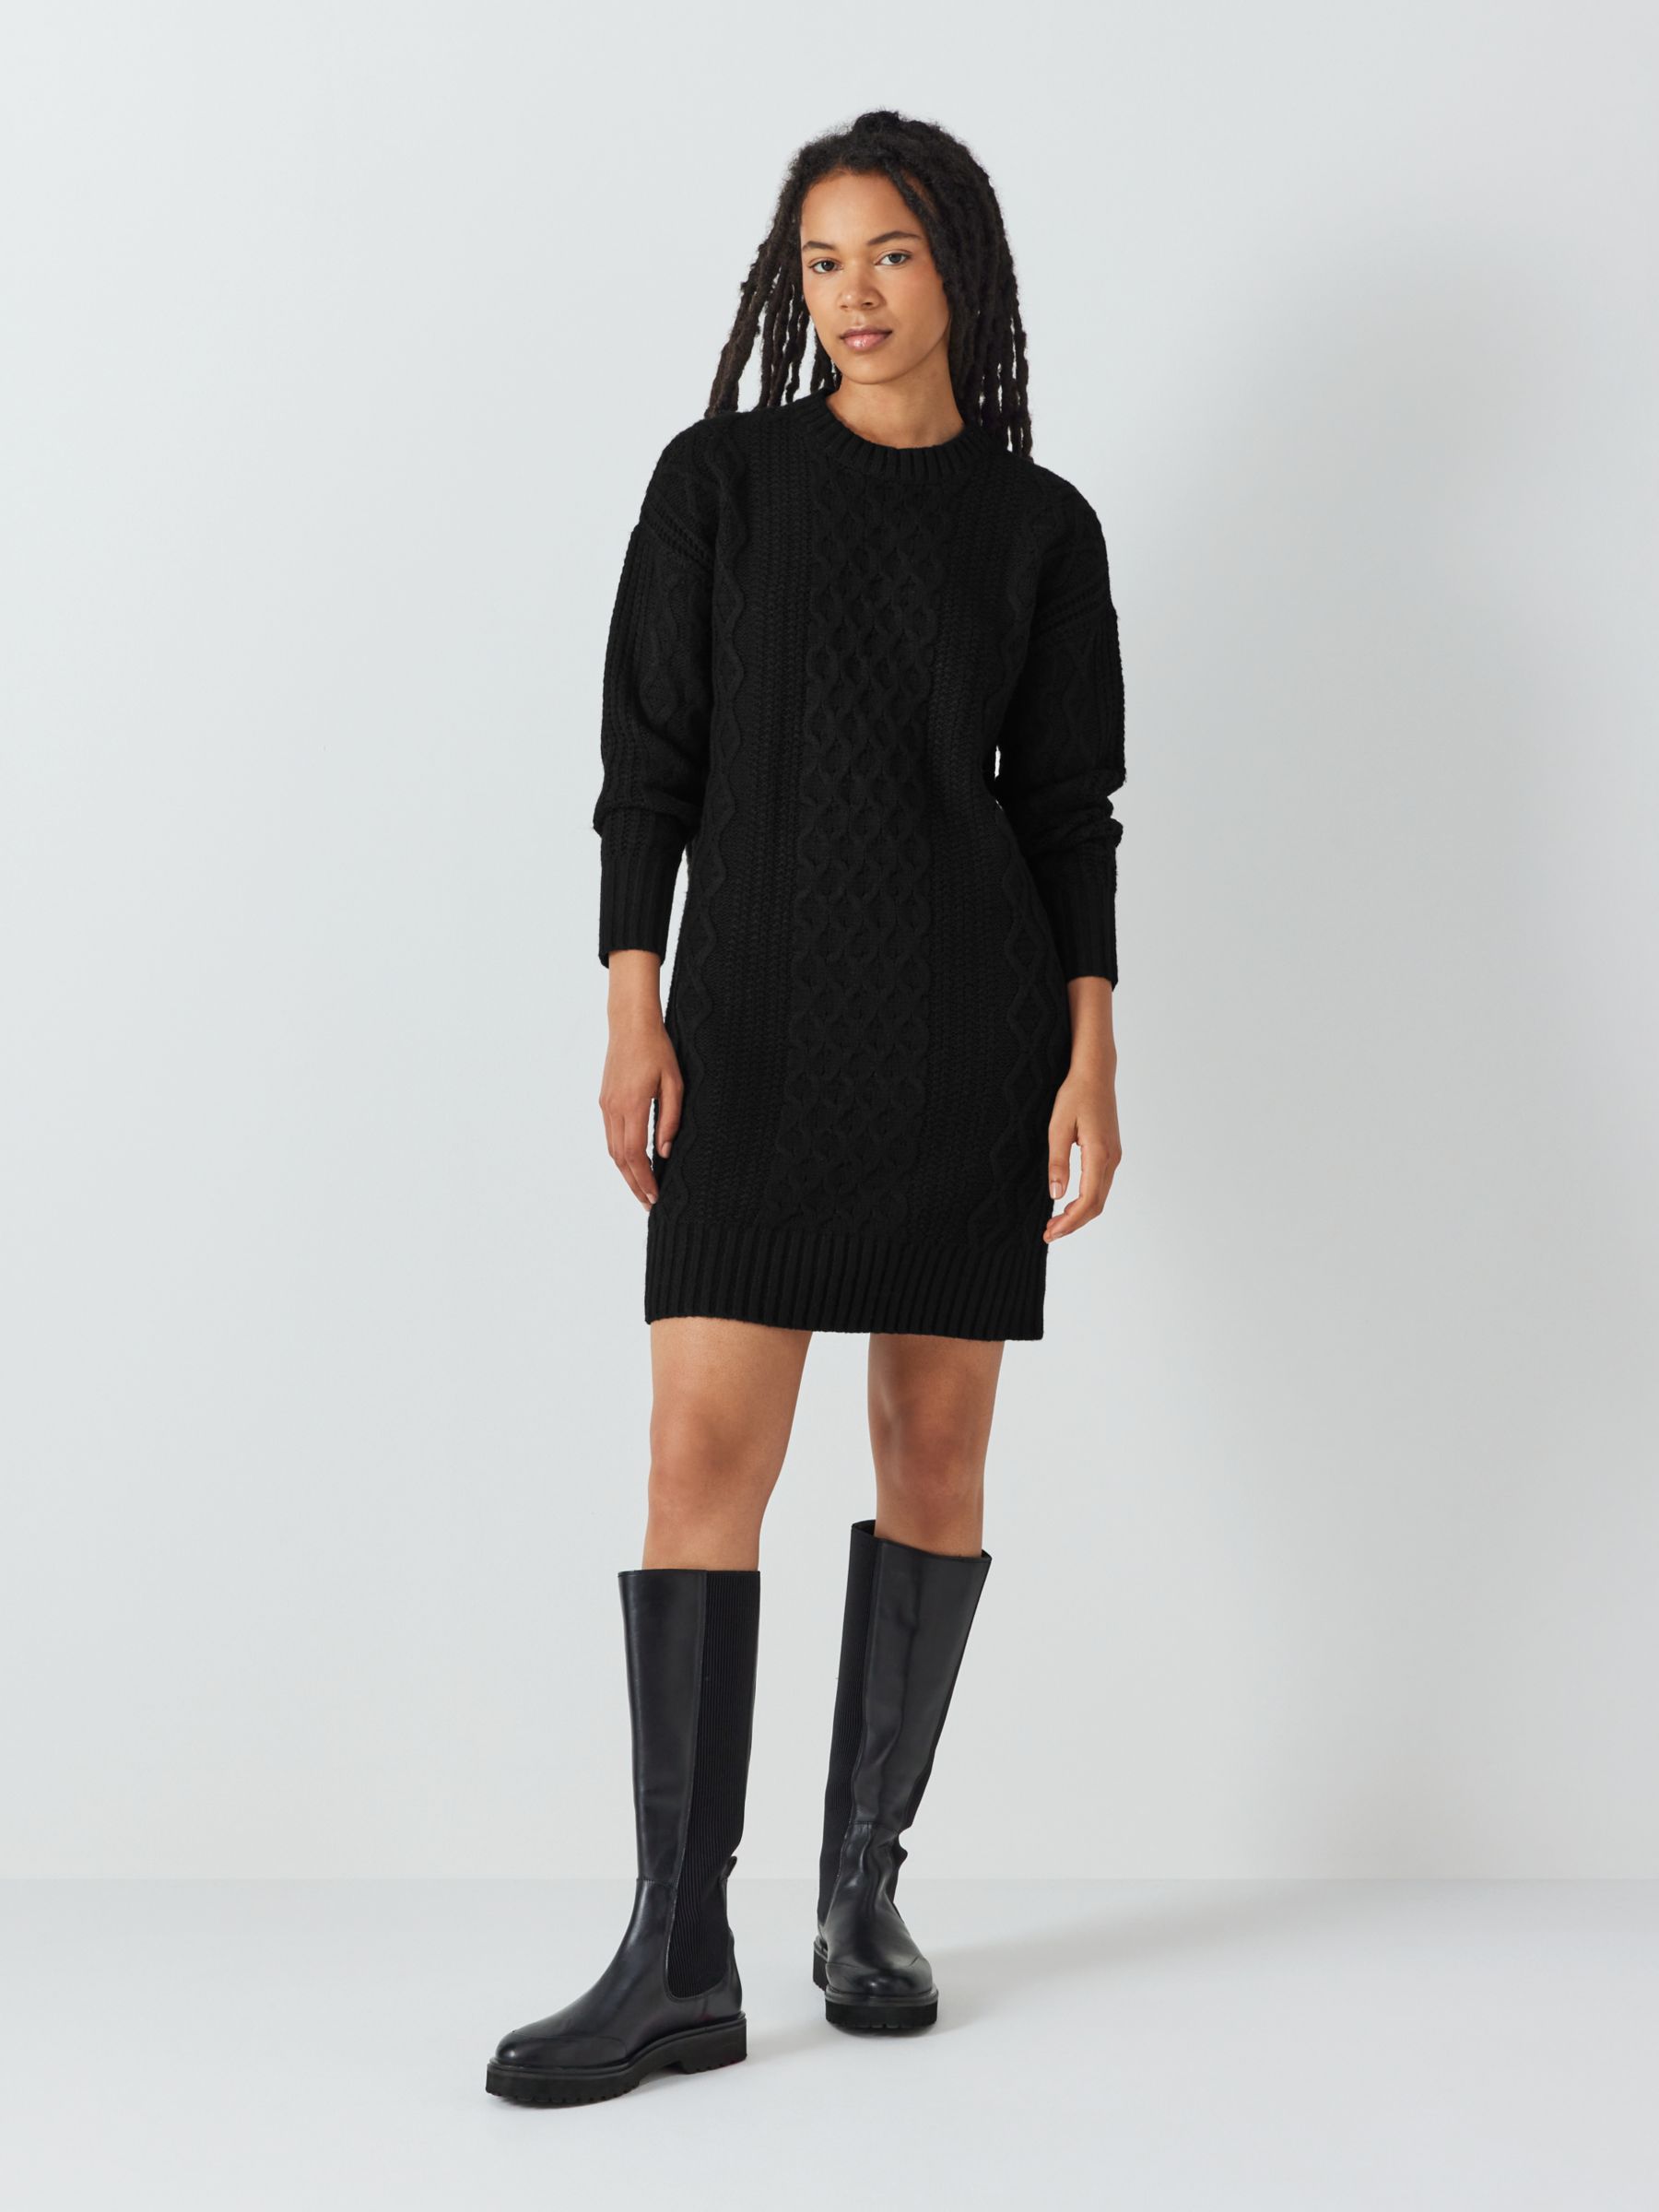 Women's Grey Knit Sweater Dress, Grey Suede Ankle Boots, Black